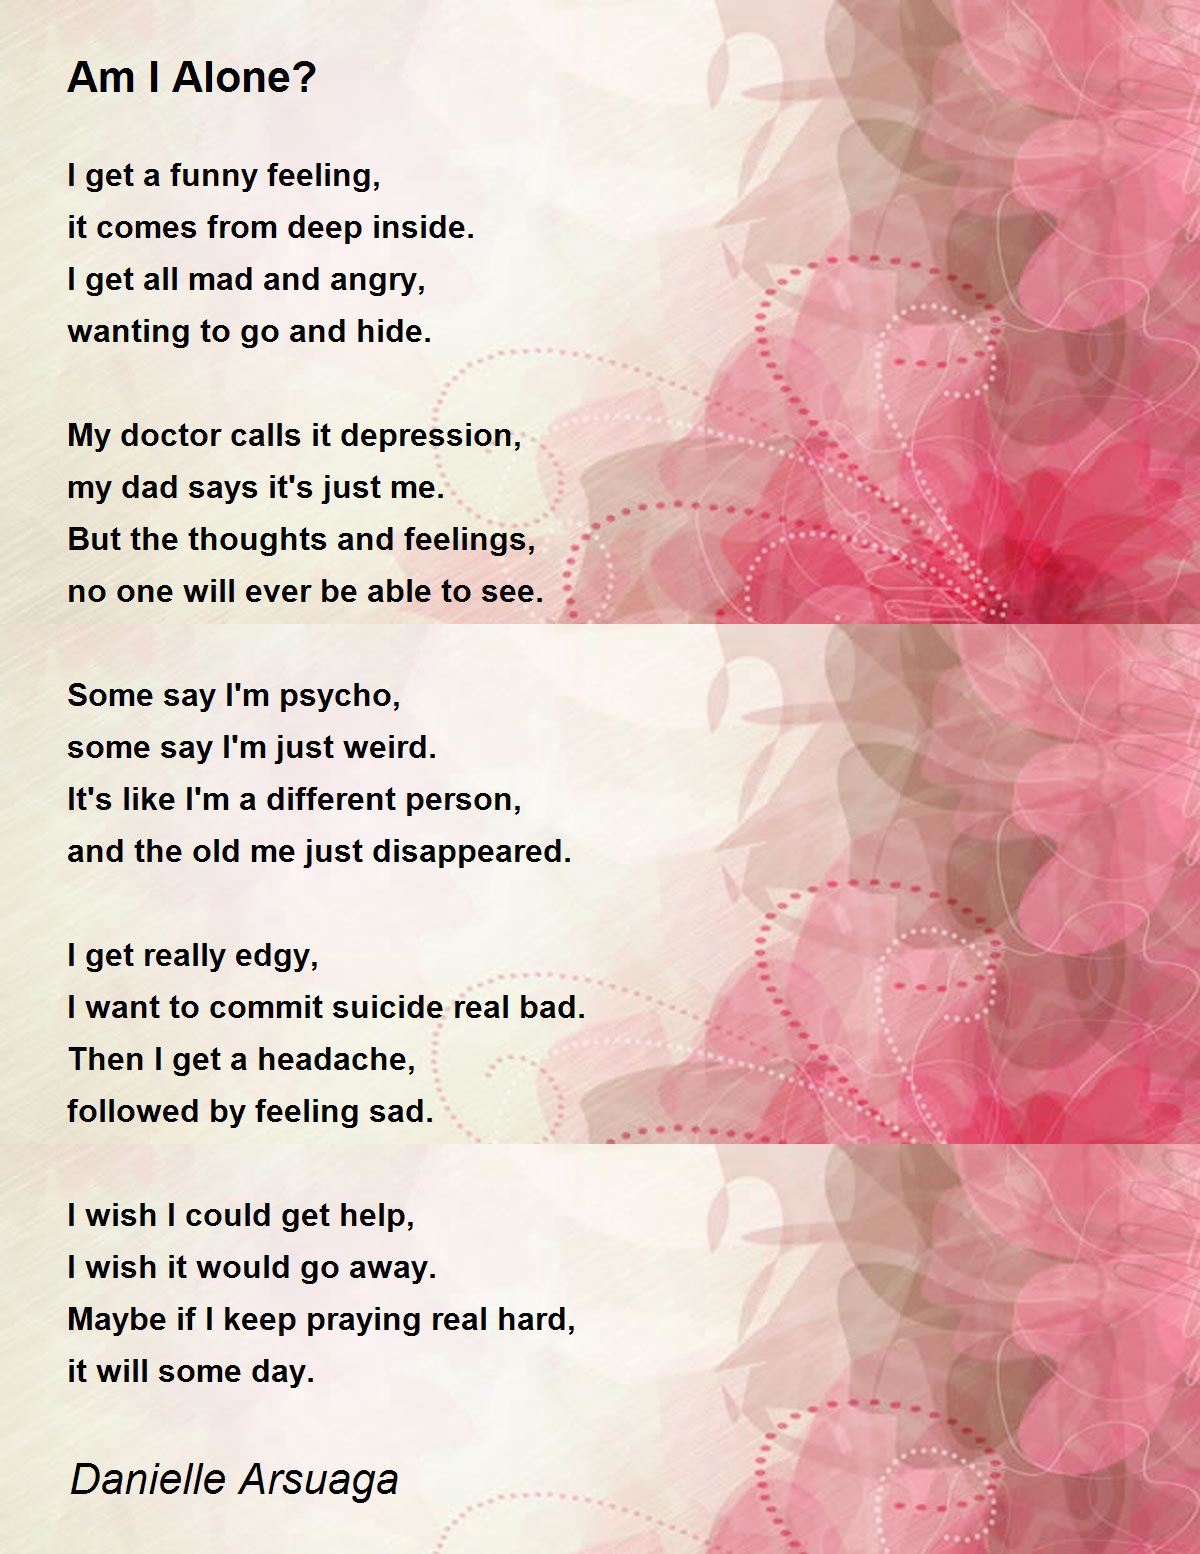 Am I Alone? - Am I Alone? Poem by Danielle Arsuaga